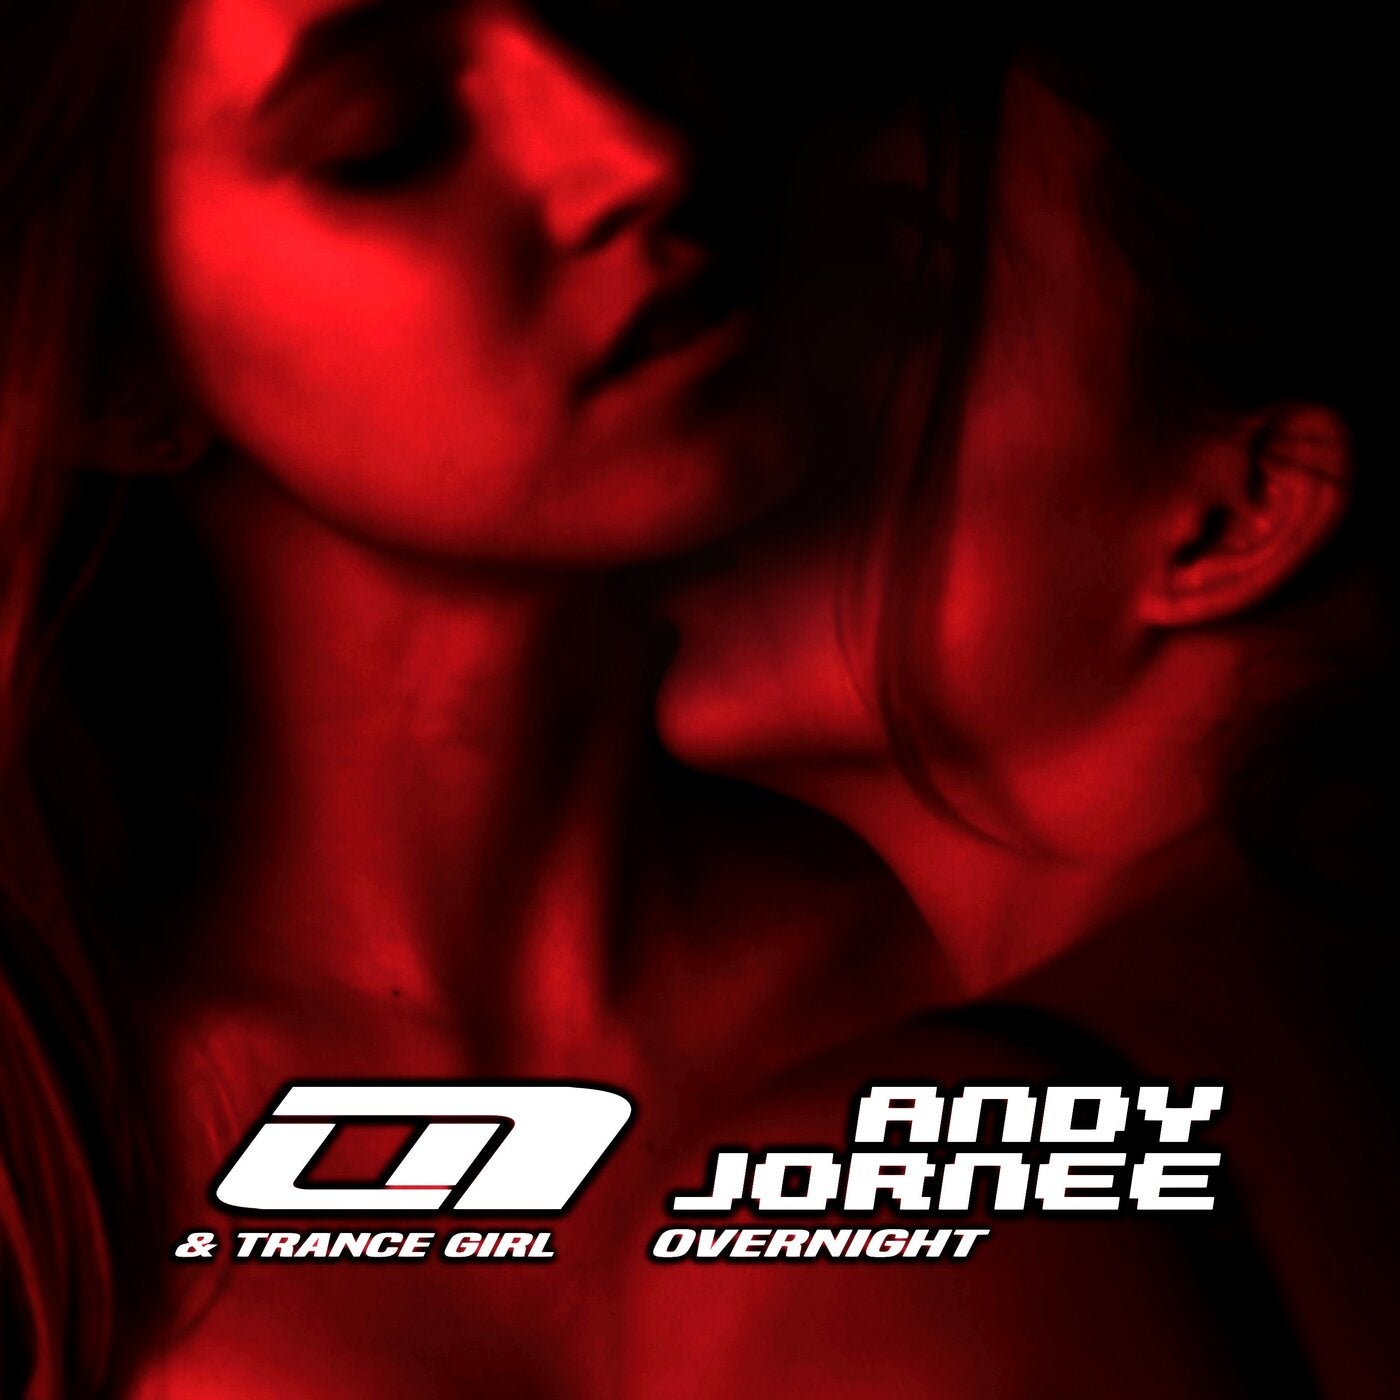 Andy Jornee, Trance Girl – Overnight (U7FutureTrance) [U7FT23007]